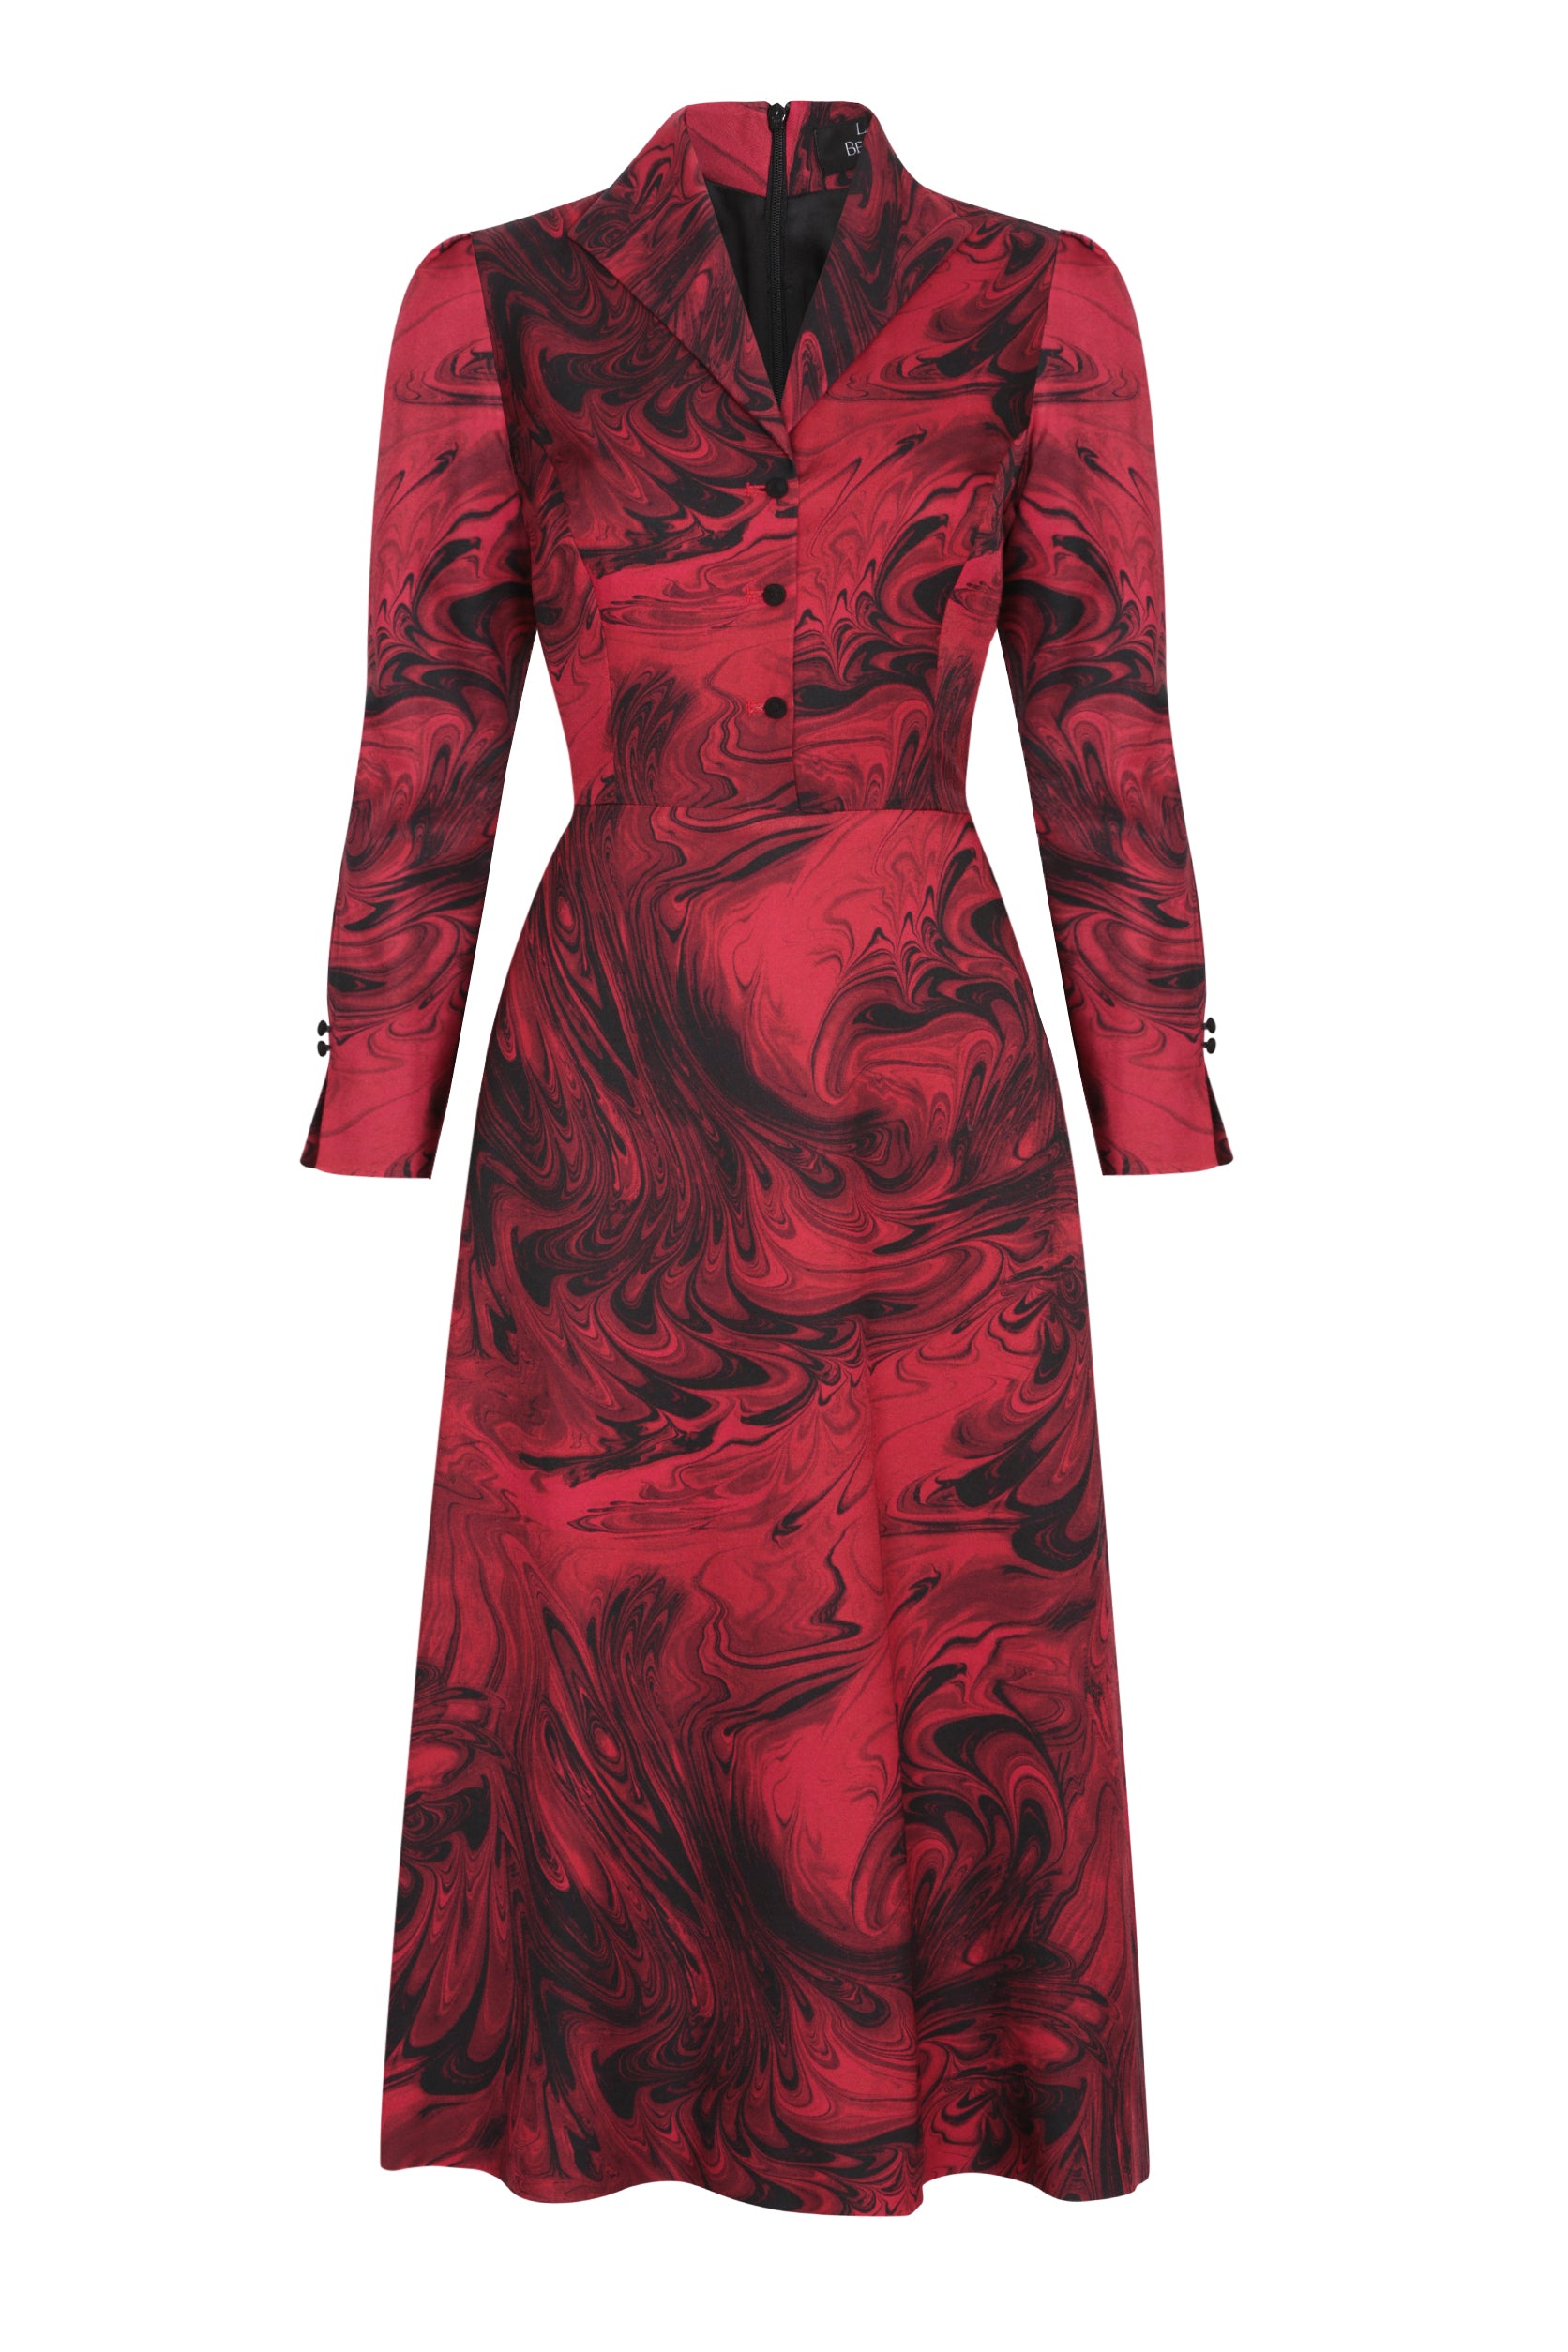 Long-Sleeved Midi Dress in Dark Red and Black Marble Print - Nadia